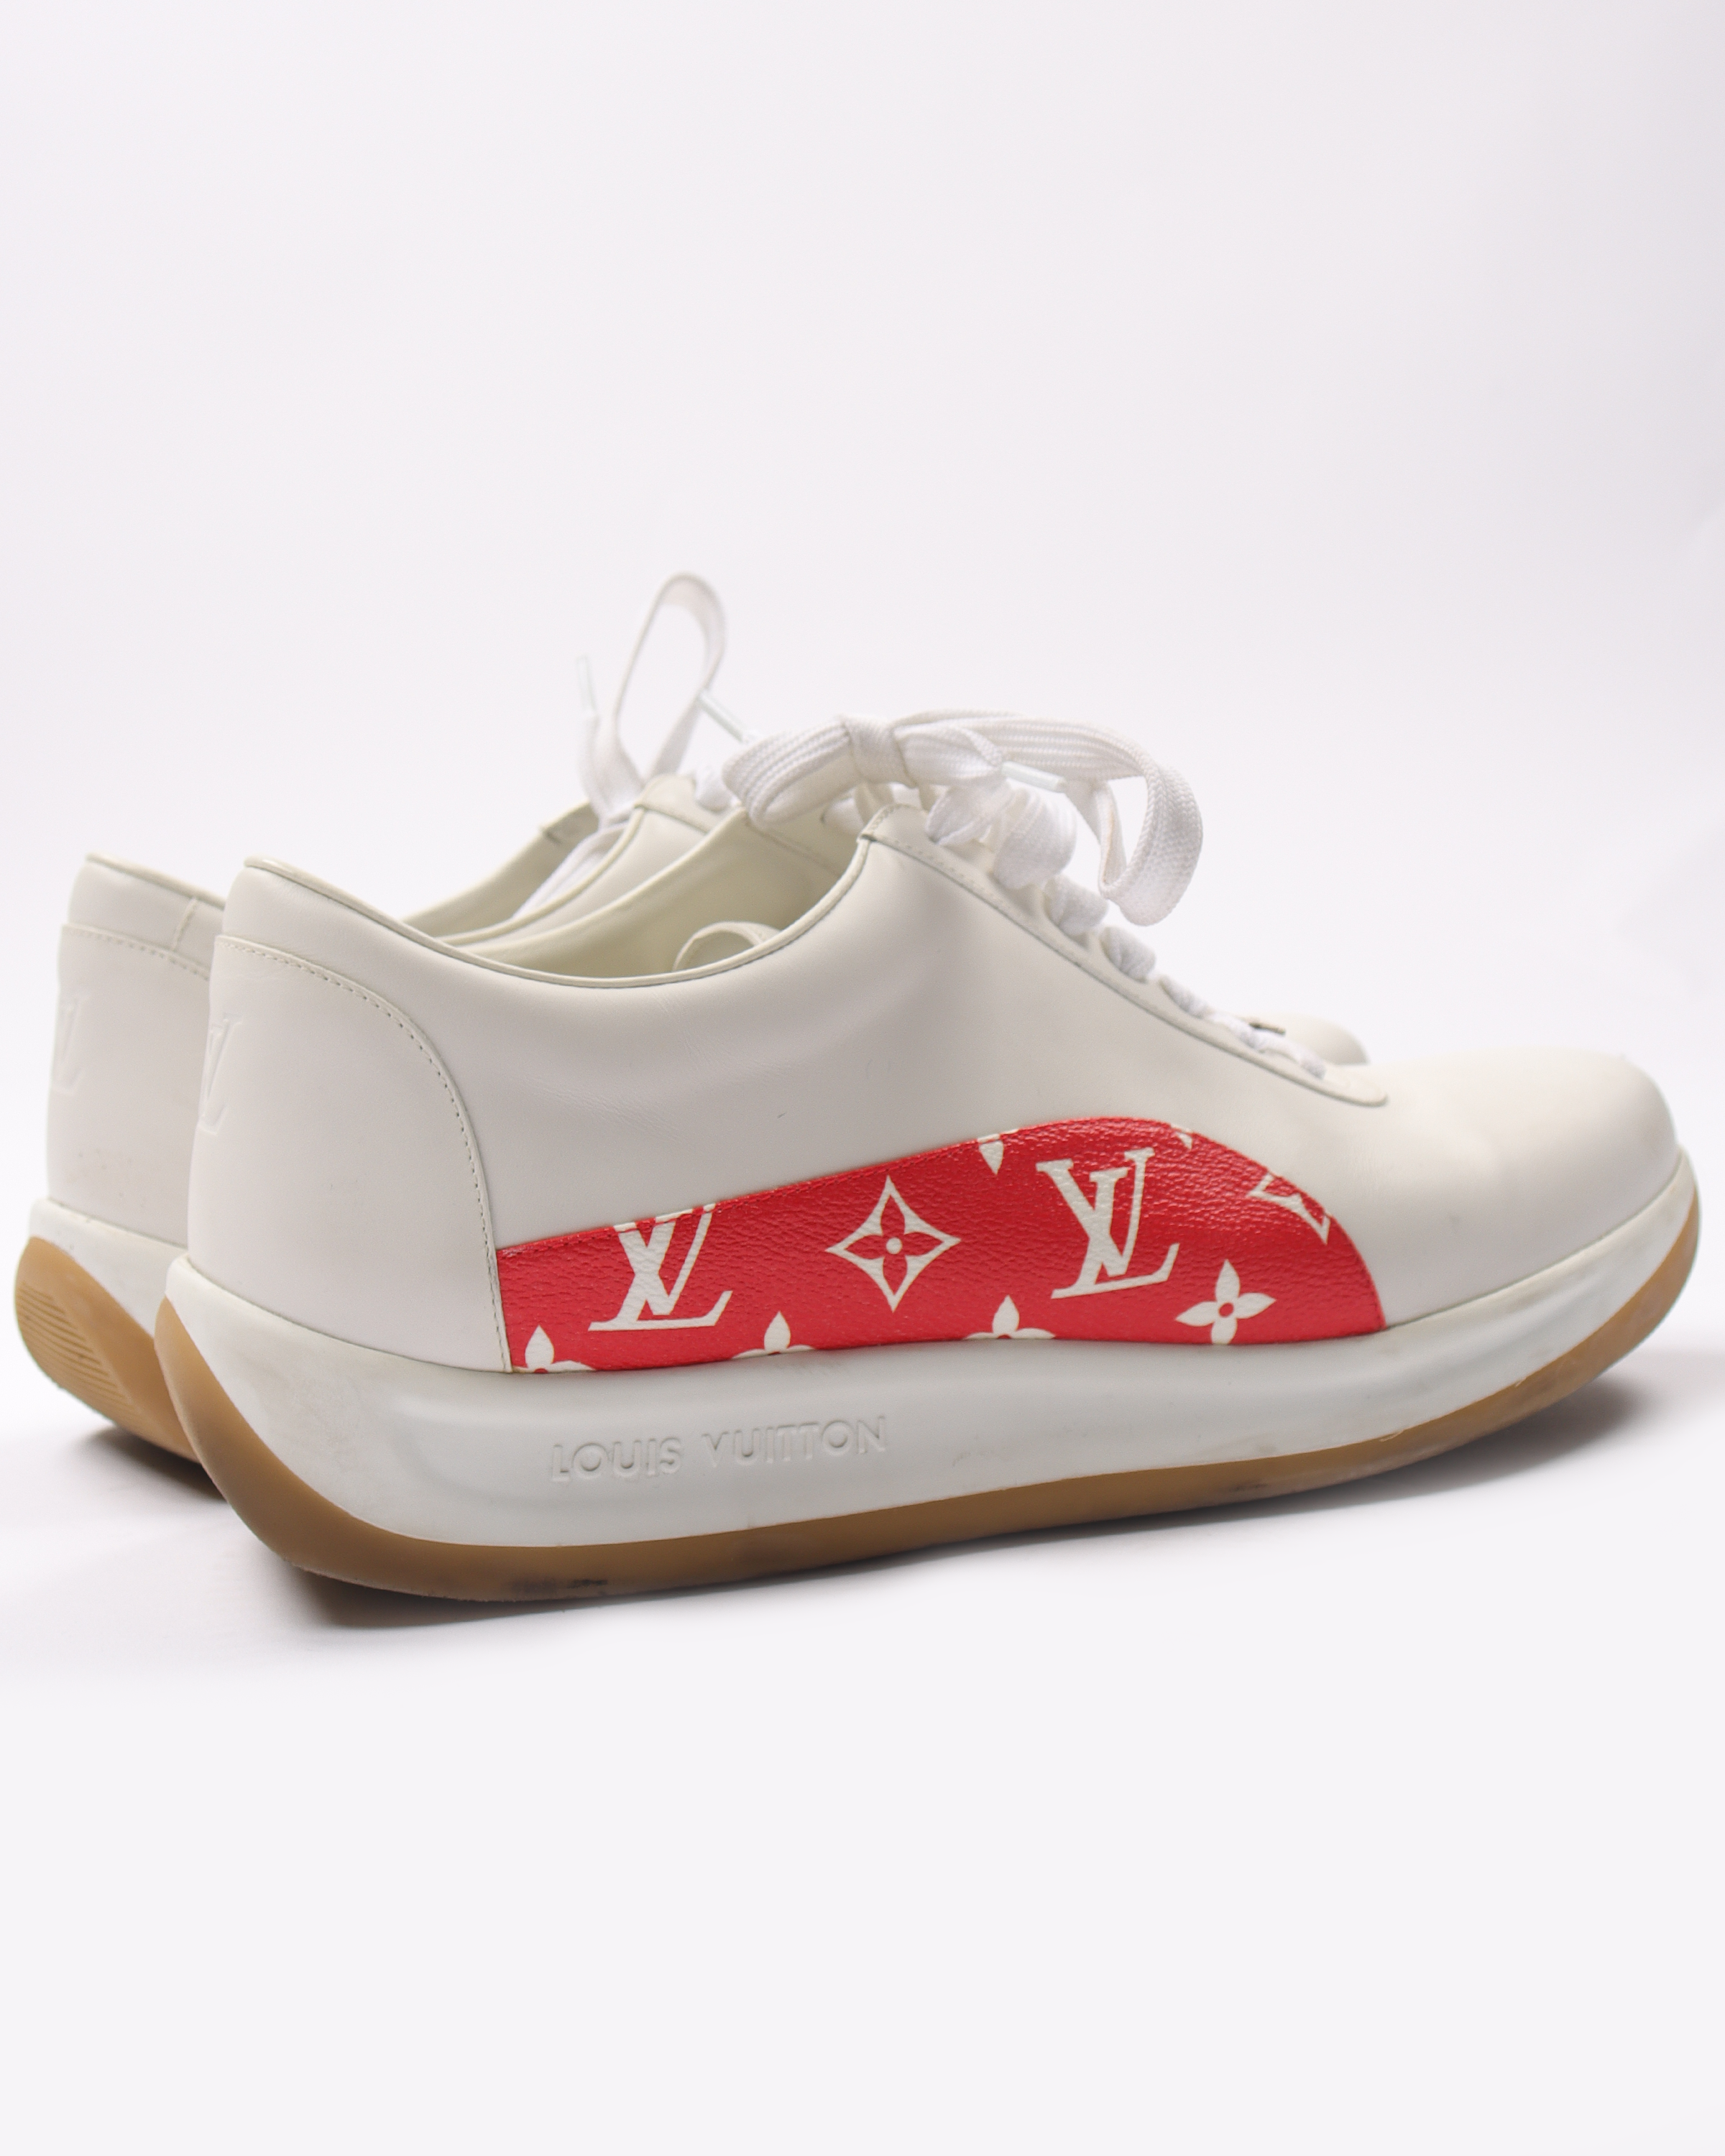 Supreme x Louis Vuitton Sport Sneaker 'Monogram Red